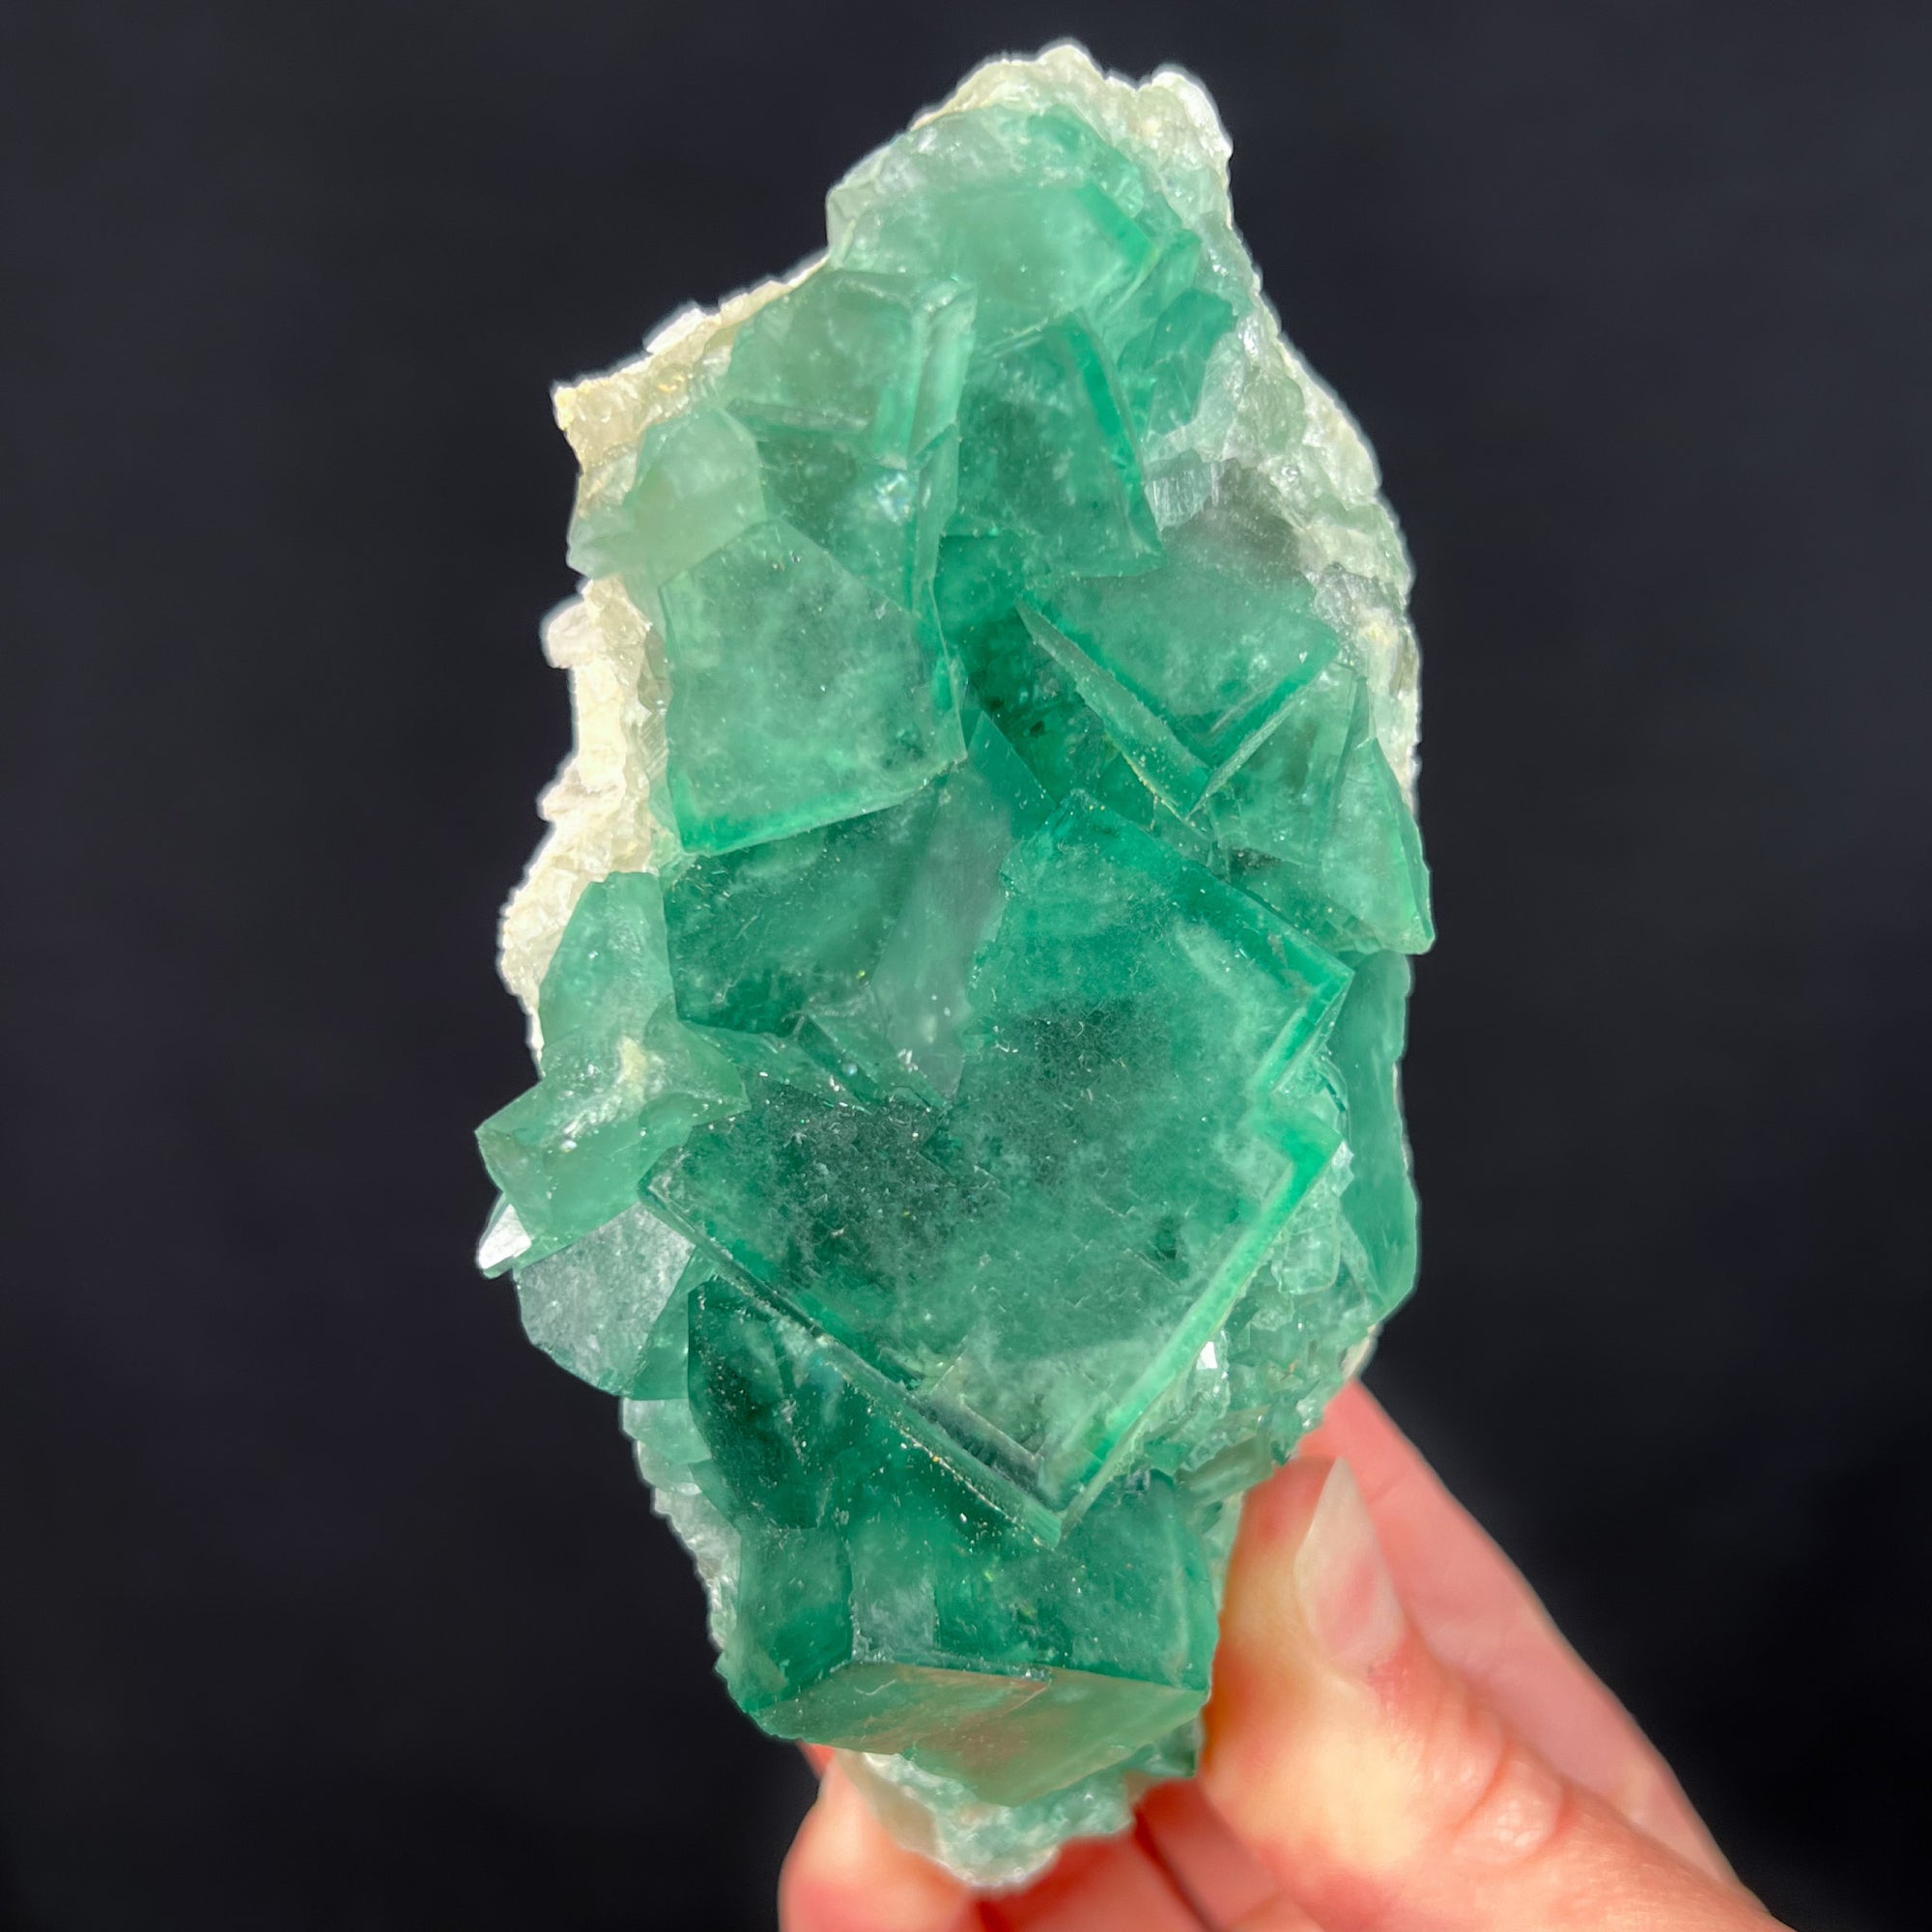 Green Fluorite specimen from Madagascar